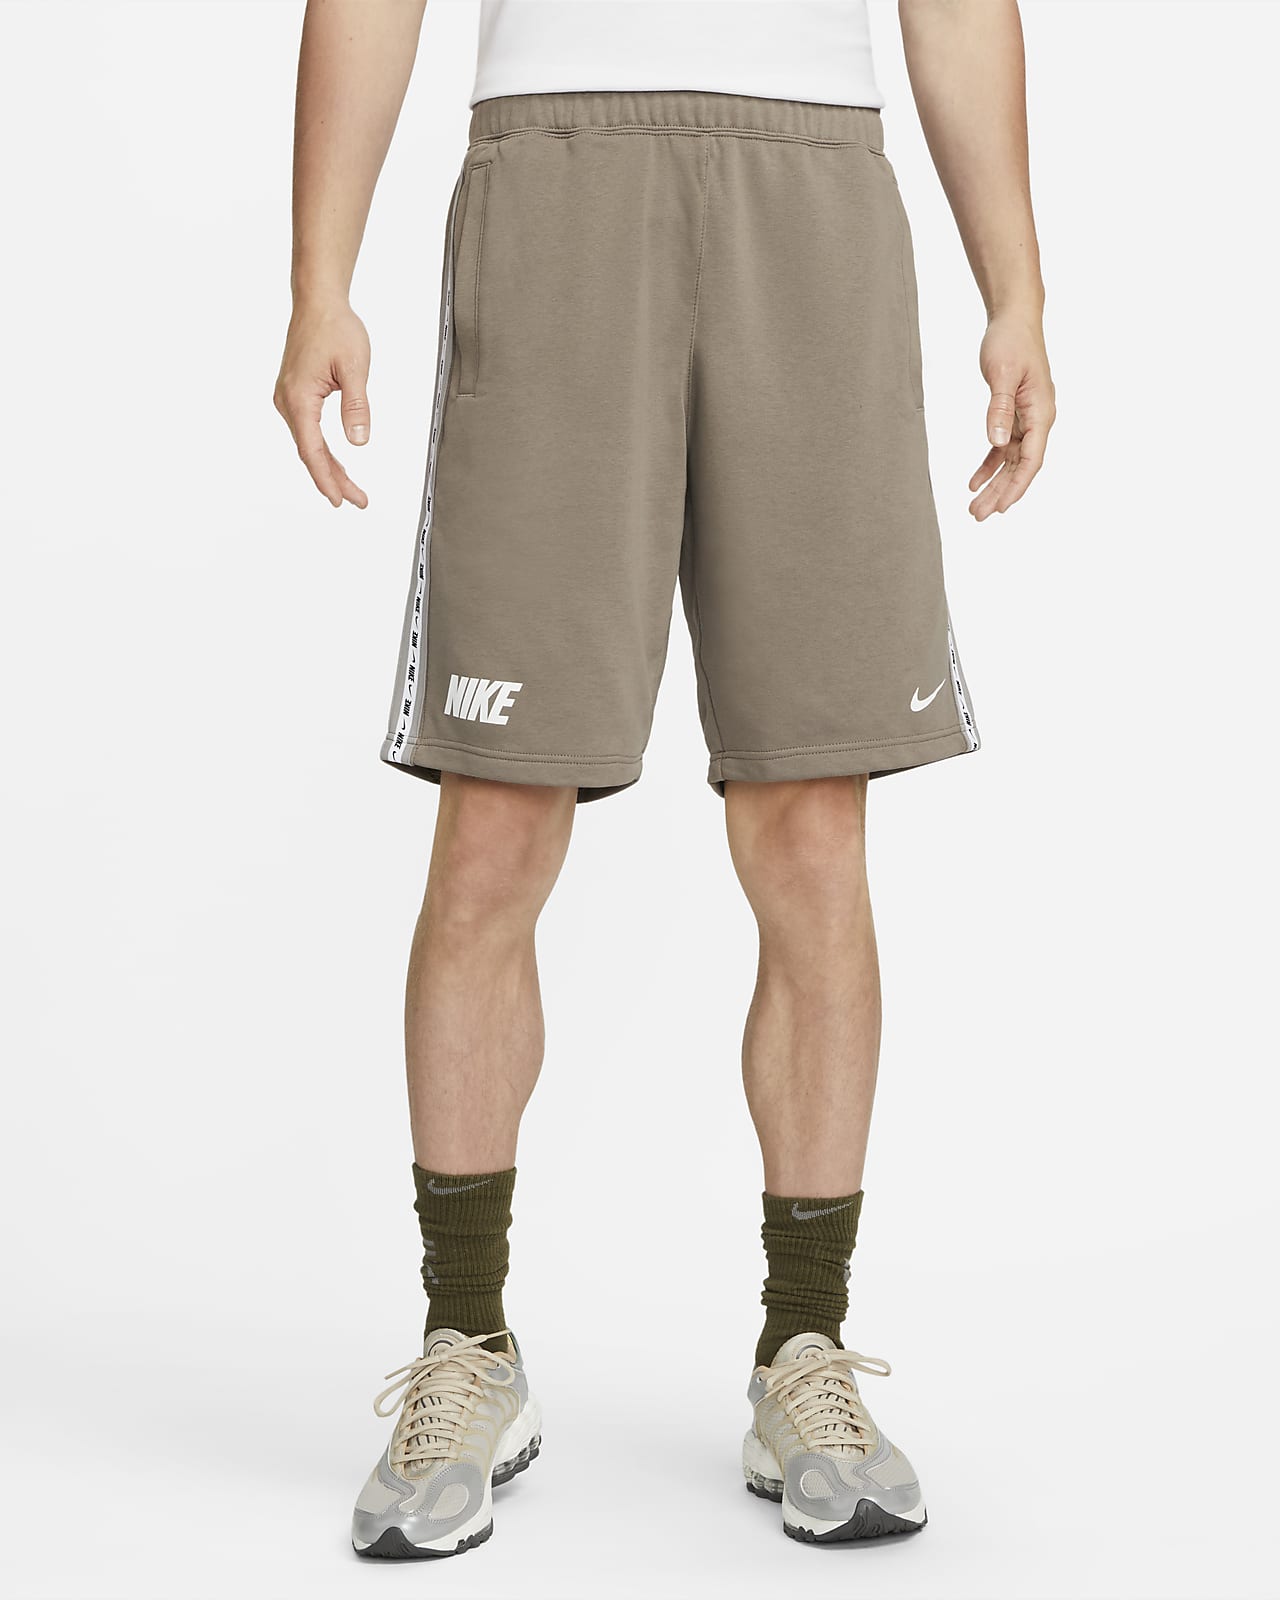 Nike Sportswear Pantalons curts de teixit French Terry amb estampat repetit - Home